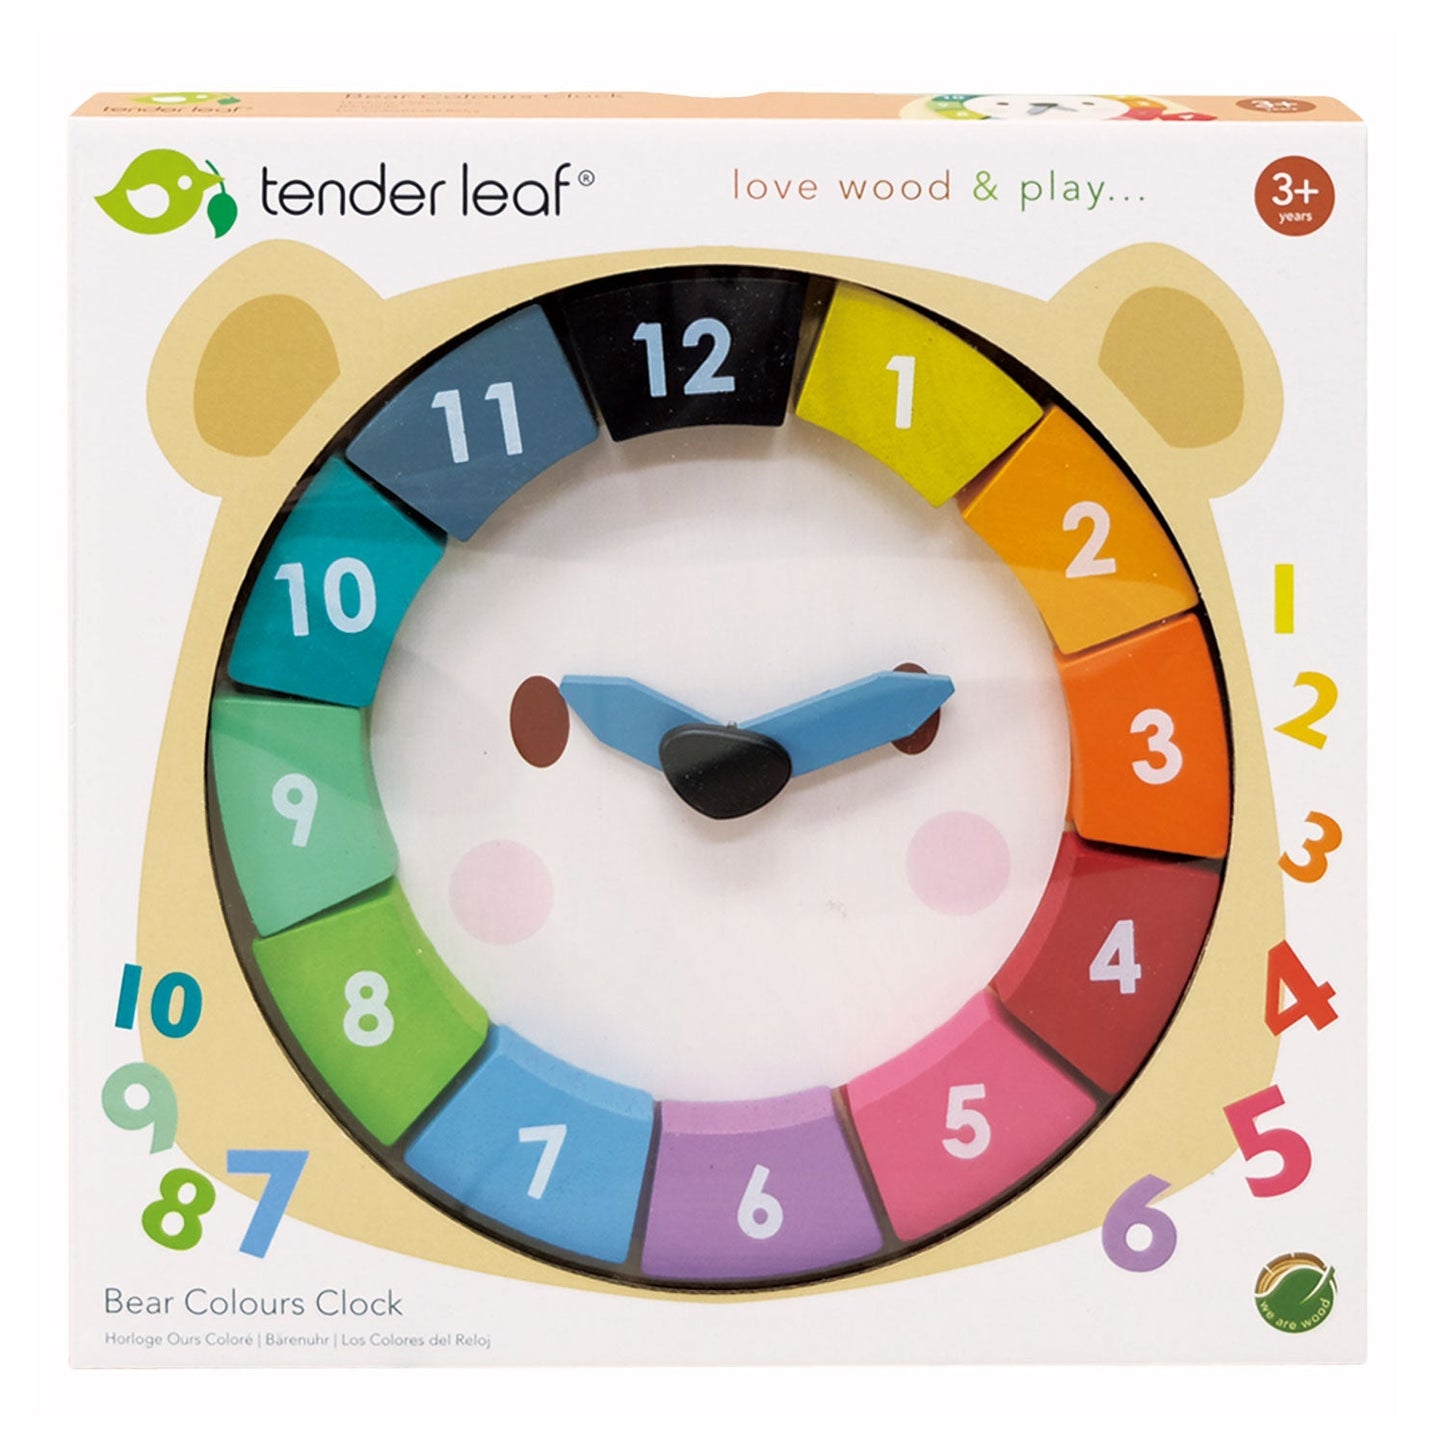 Tender leaf bear colours clock